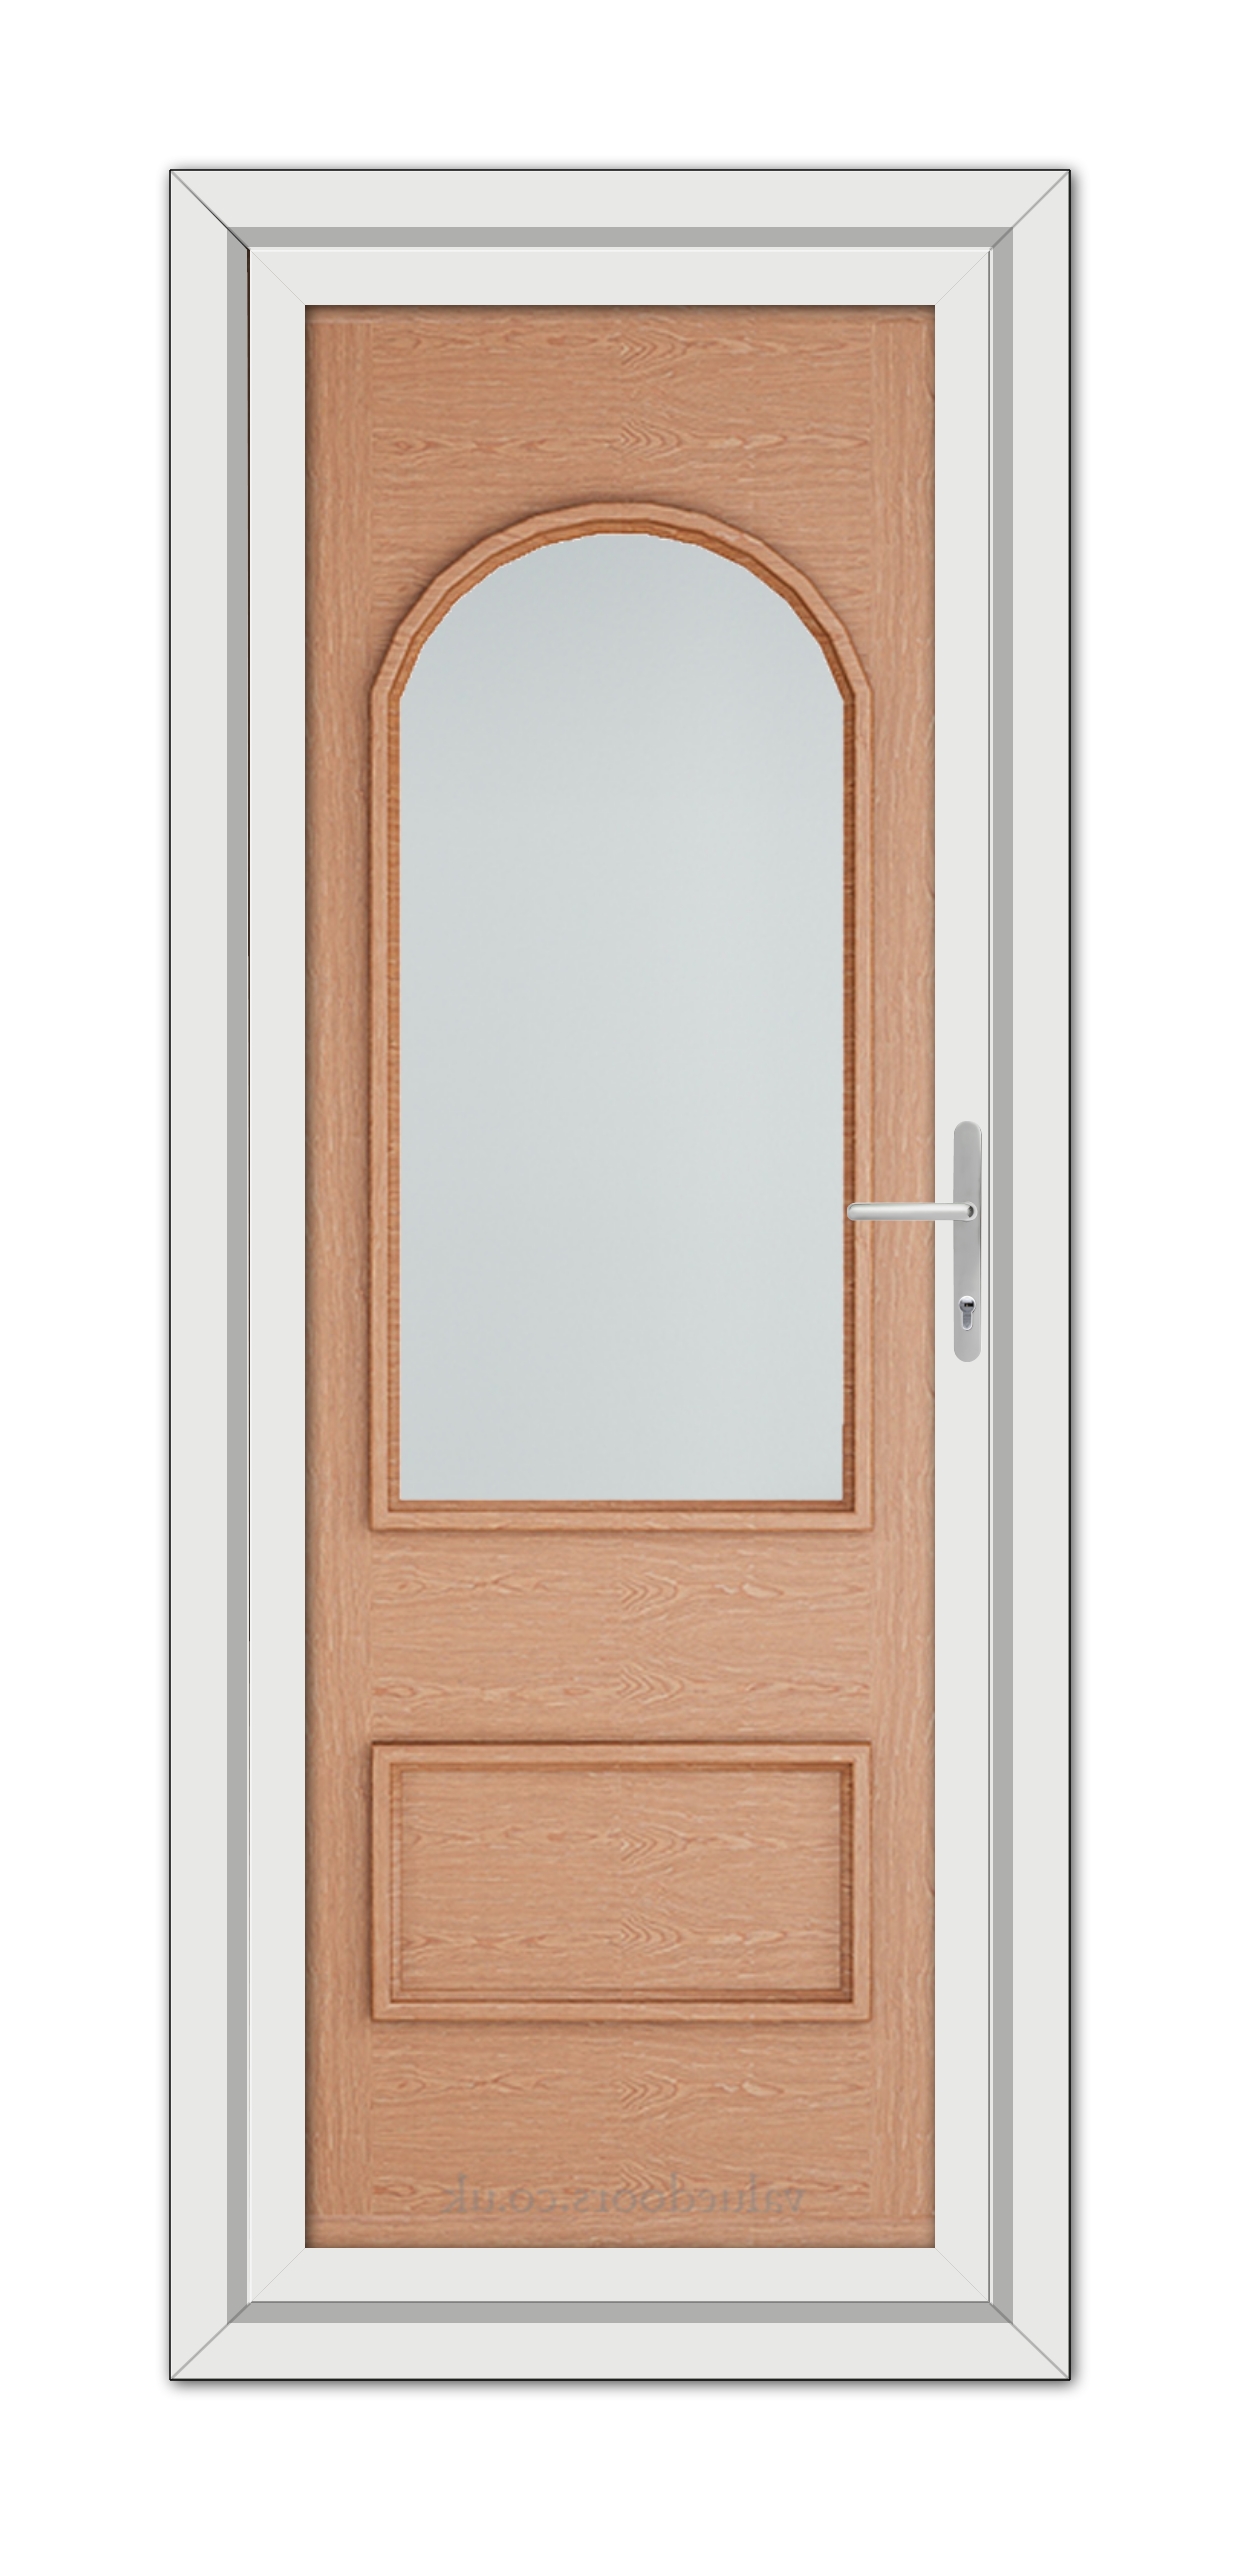 An Irish Oak Rockingham uPVC Door with a glass panel.